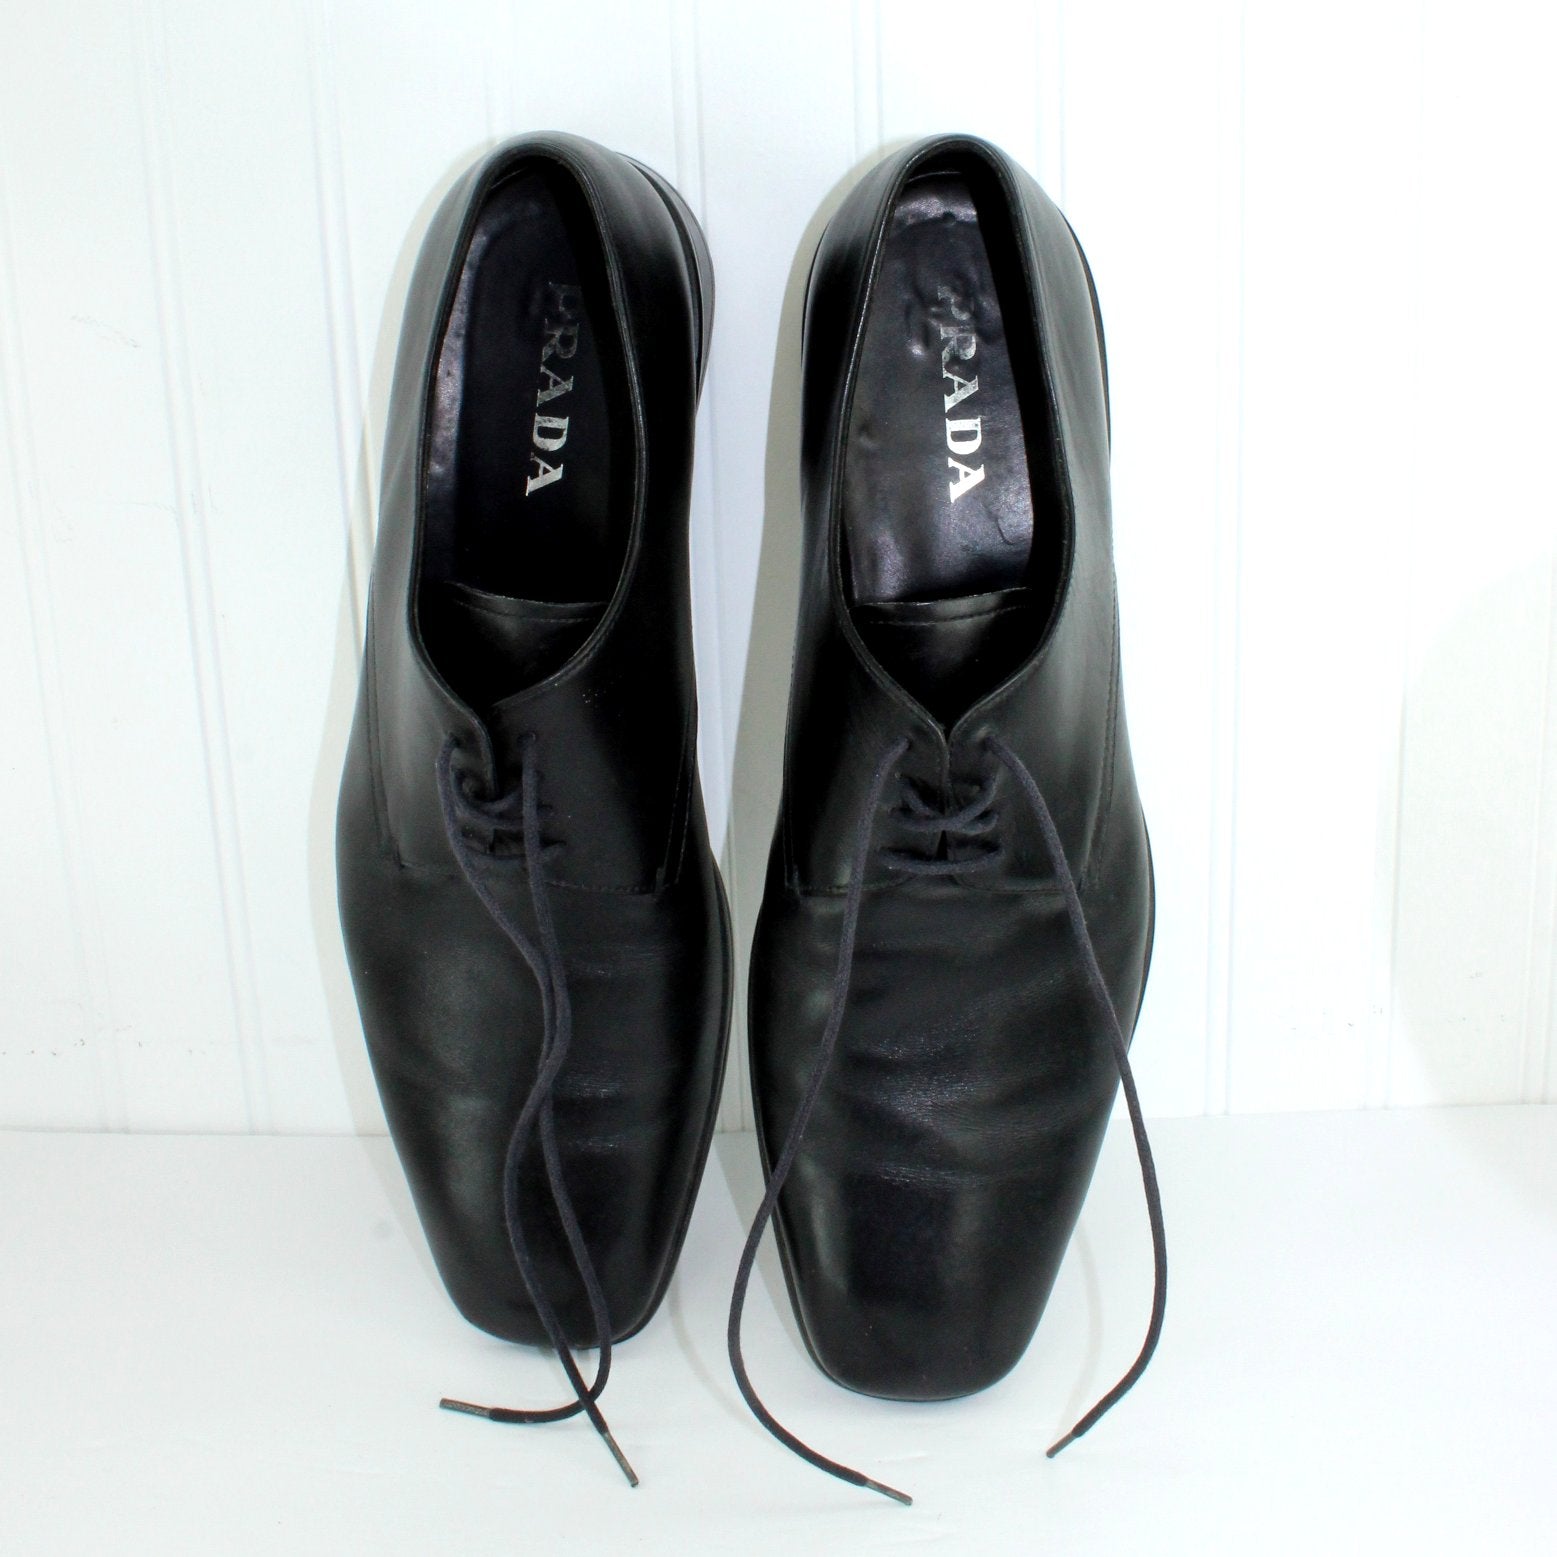 Prada Mens Black Leather Dress Shoes 10 1/2 Smooth Square Toe Elegant soles excellent